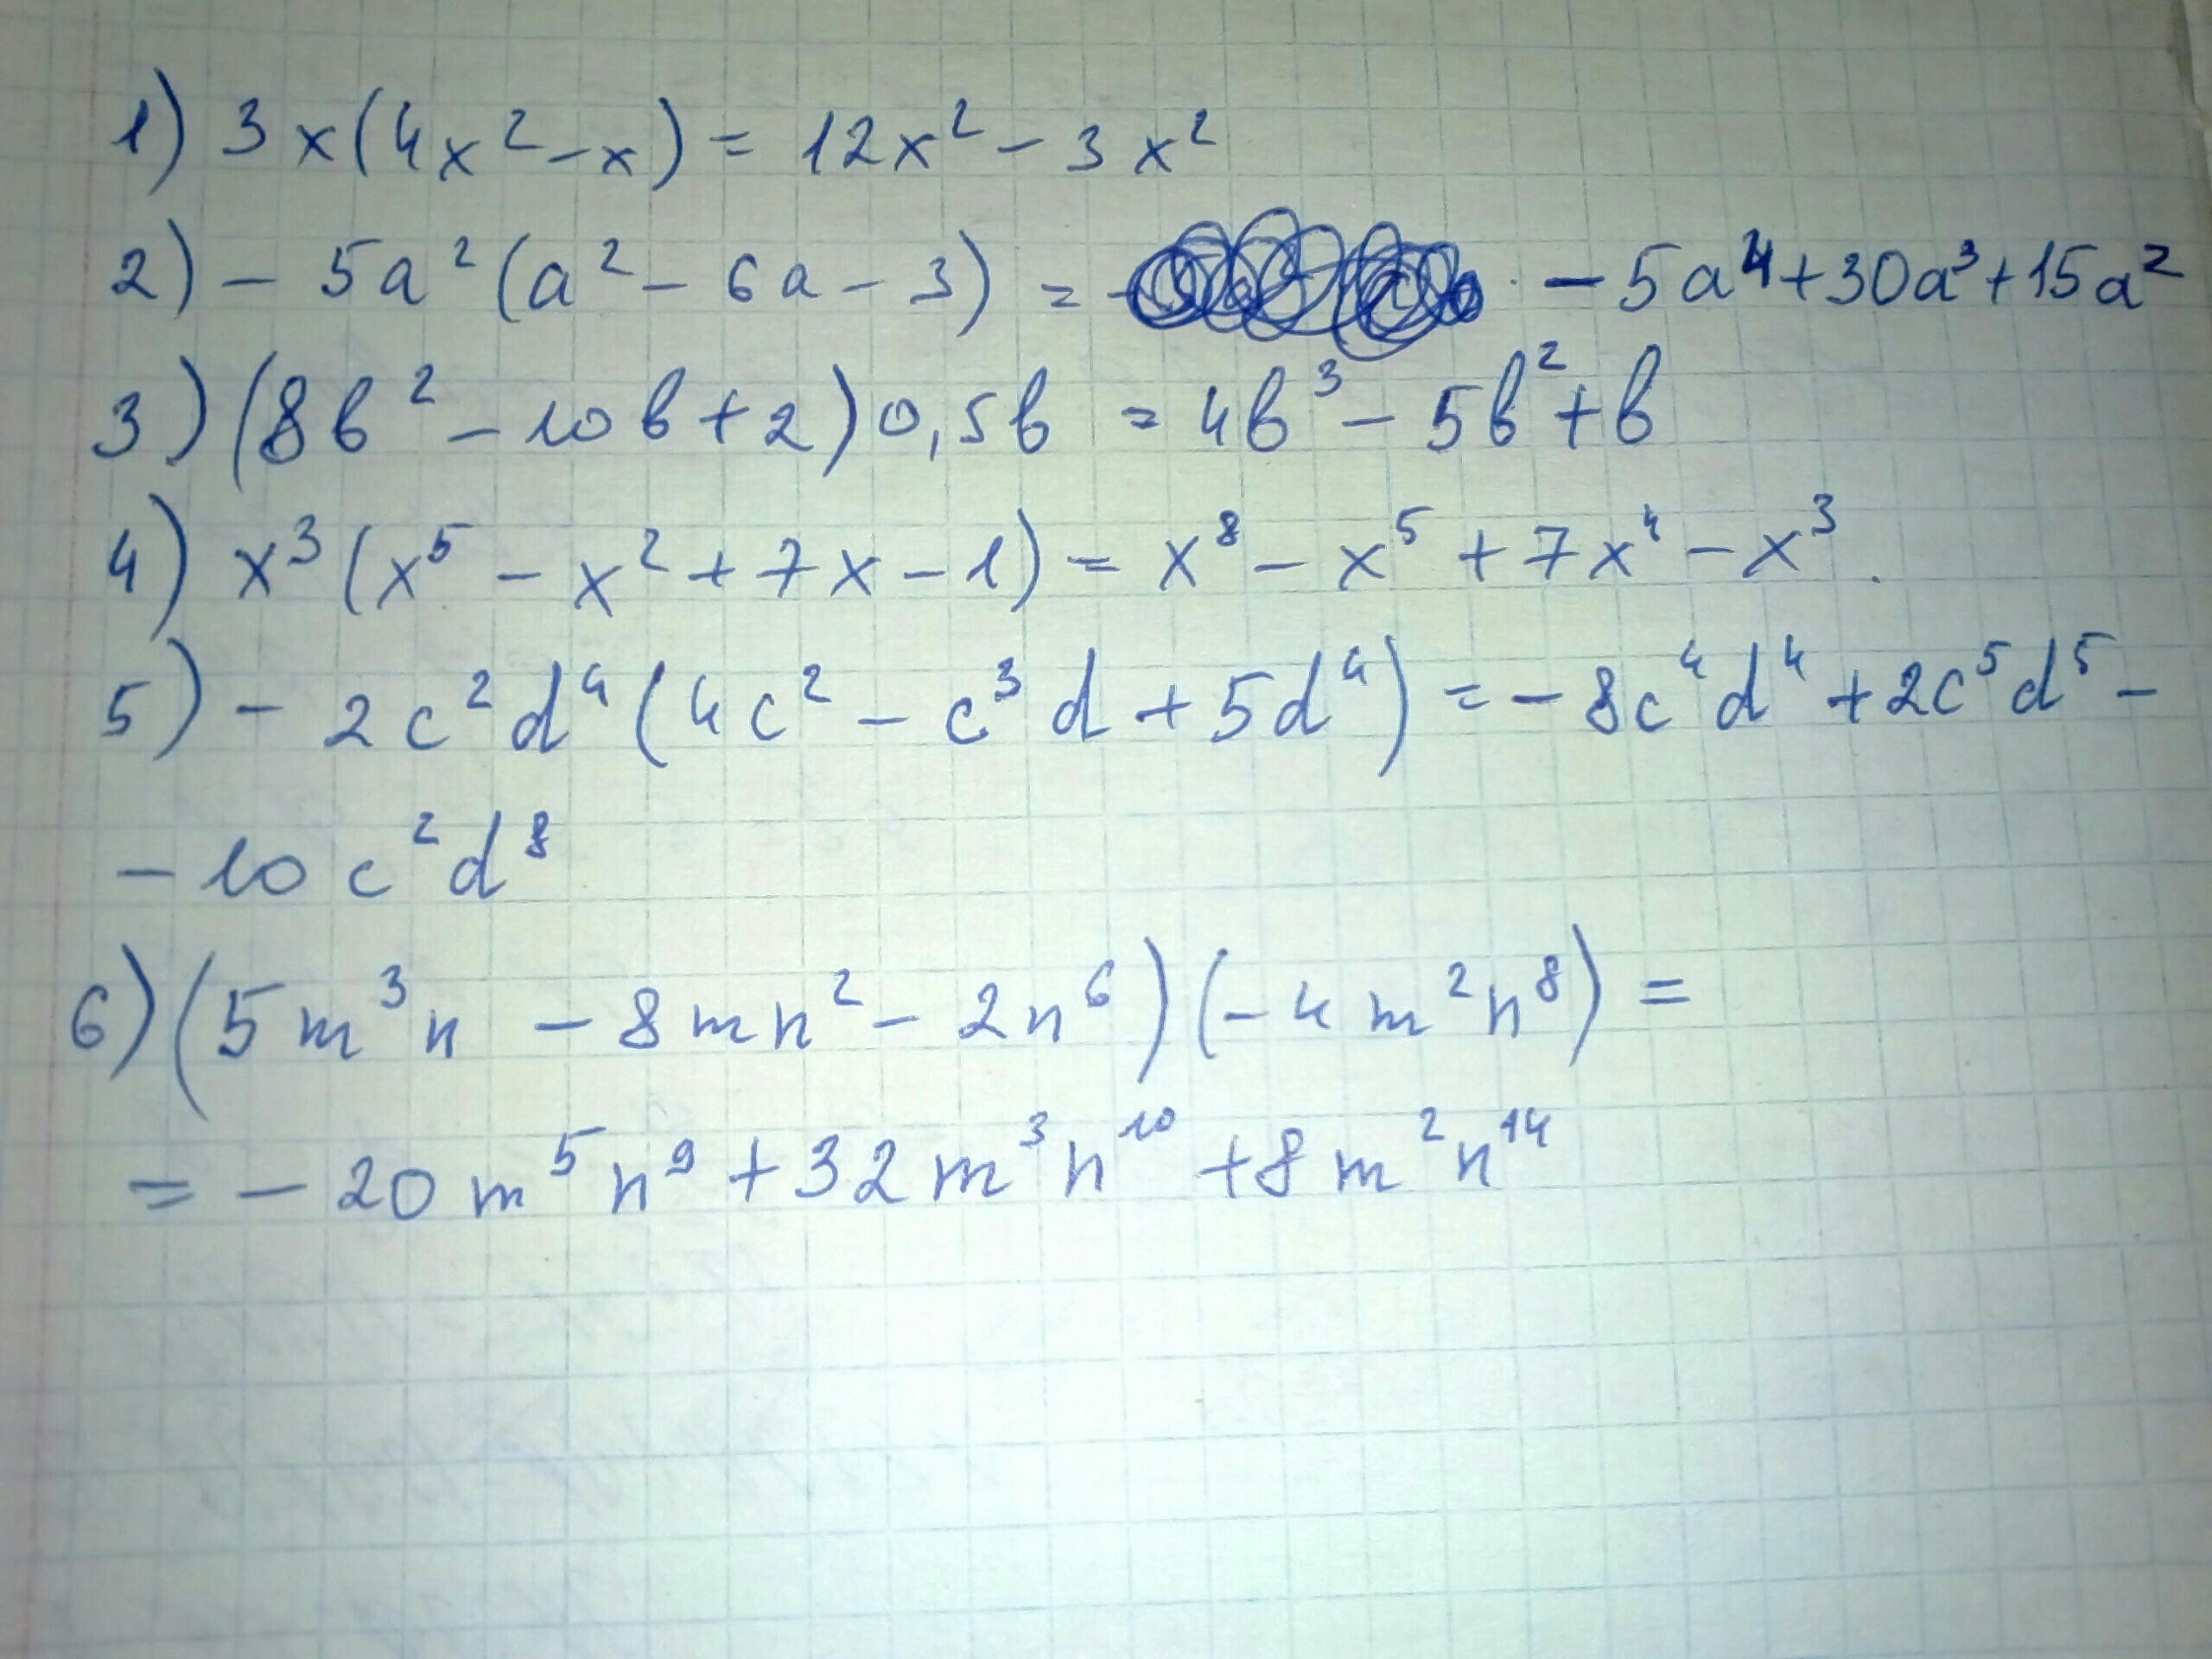 [Ax + By + C = 0,qquad (A^2 + B^2 e 0),]